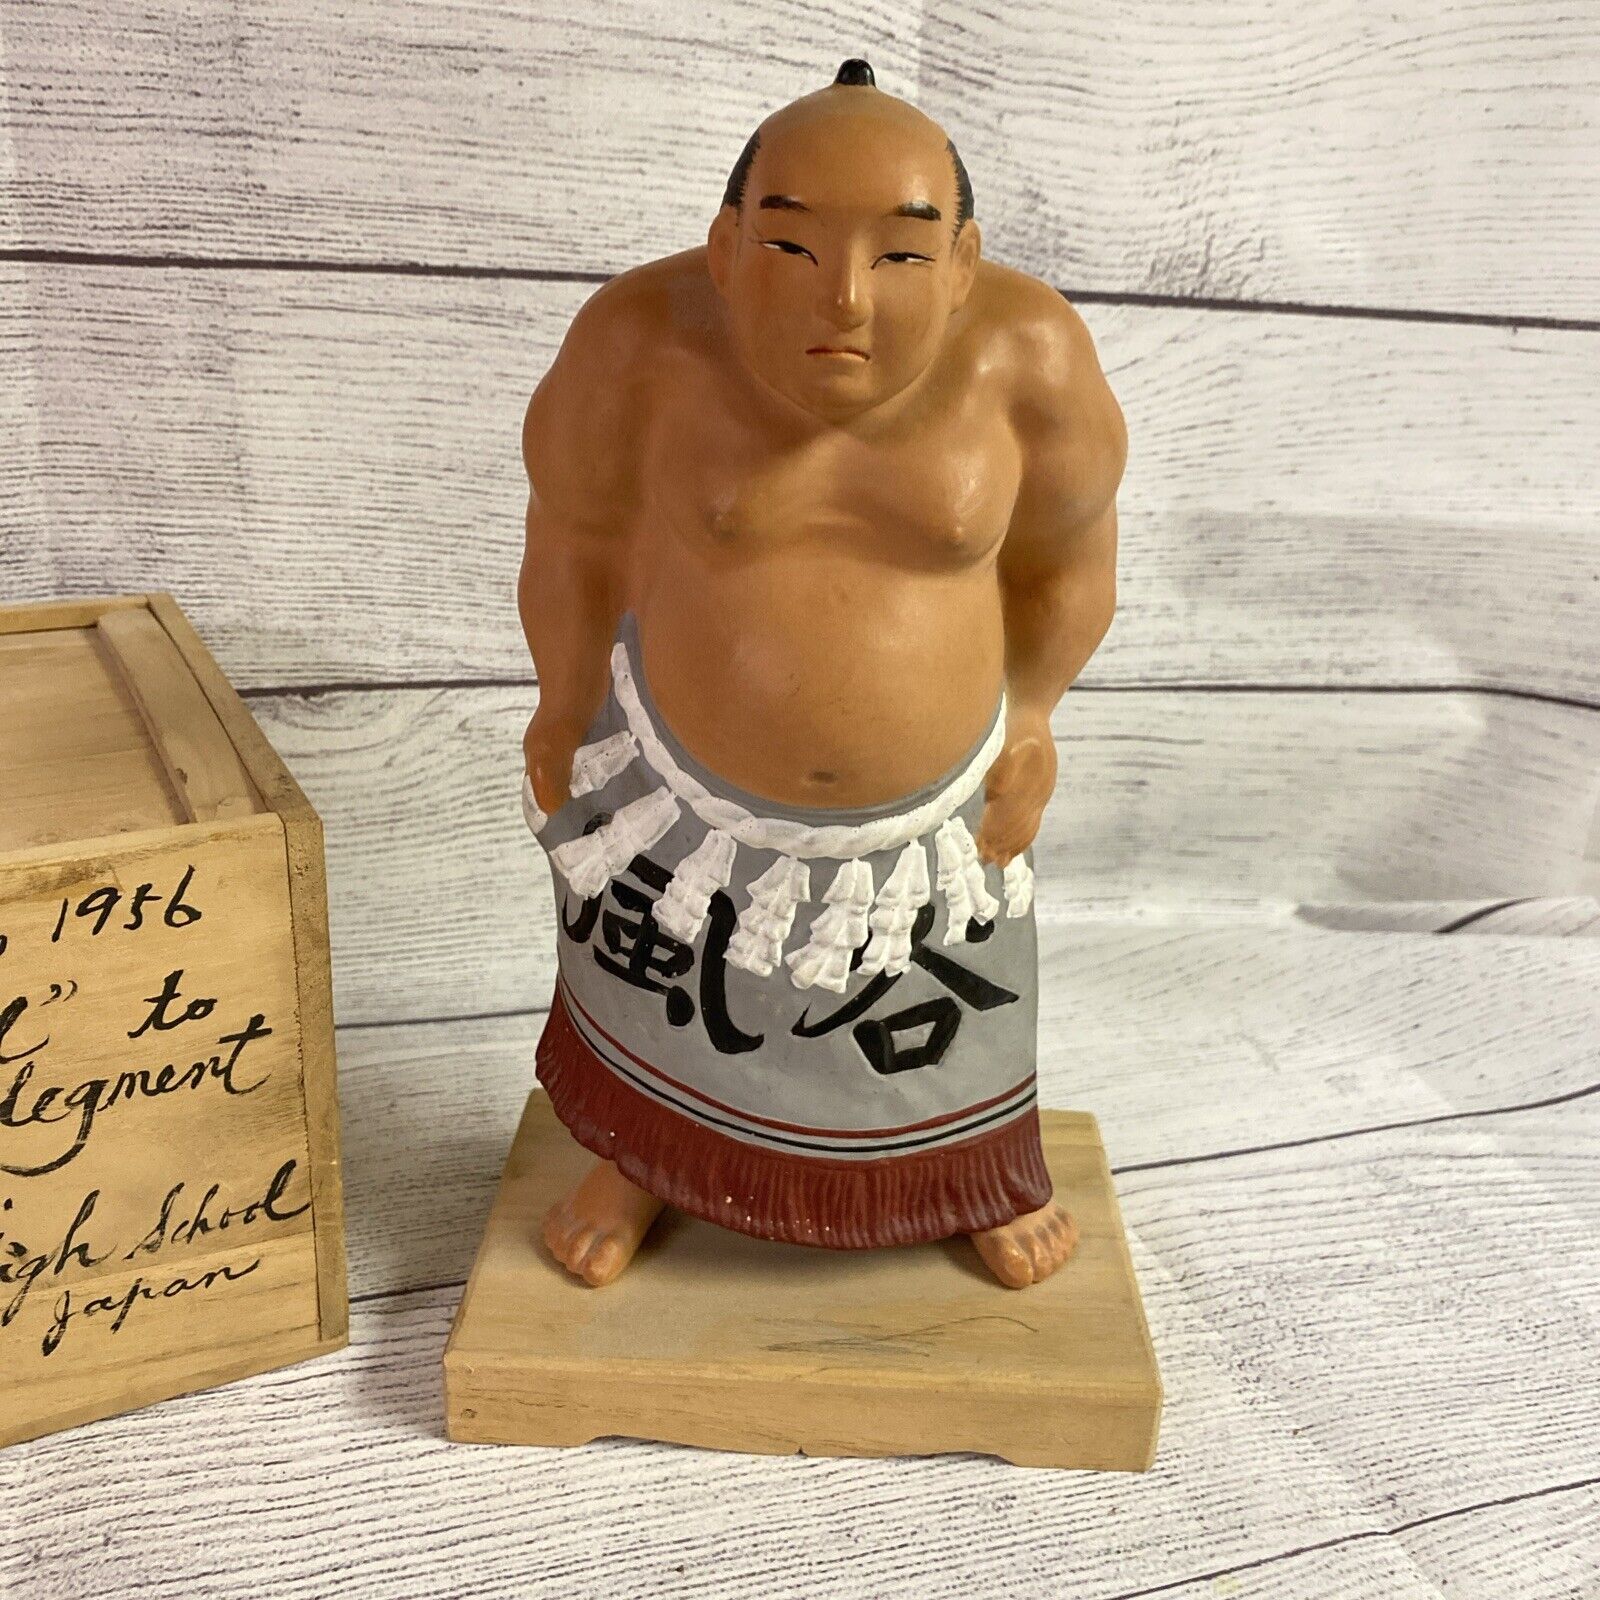 Vintage Japanese Sumo Wrestler Figurine Ceramic1956 Collectible 10” W/BOX